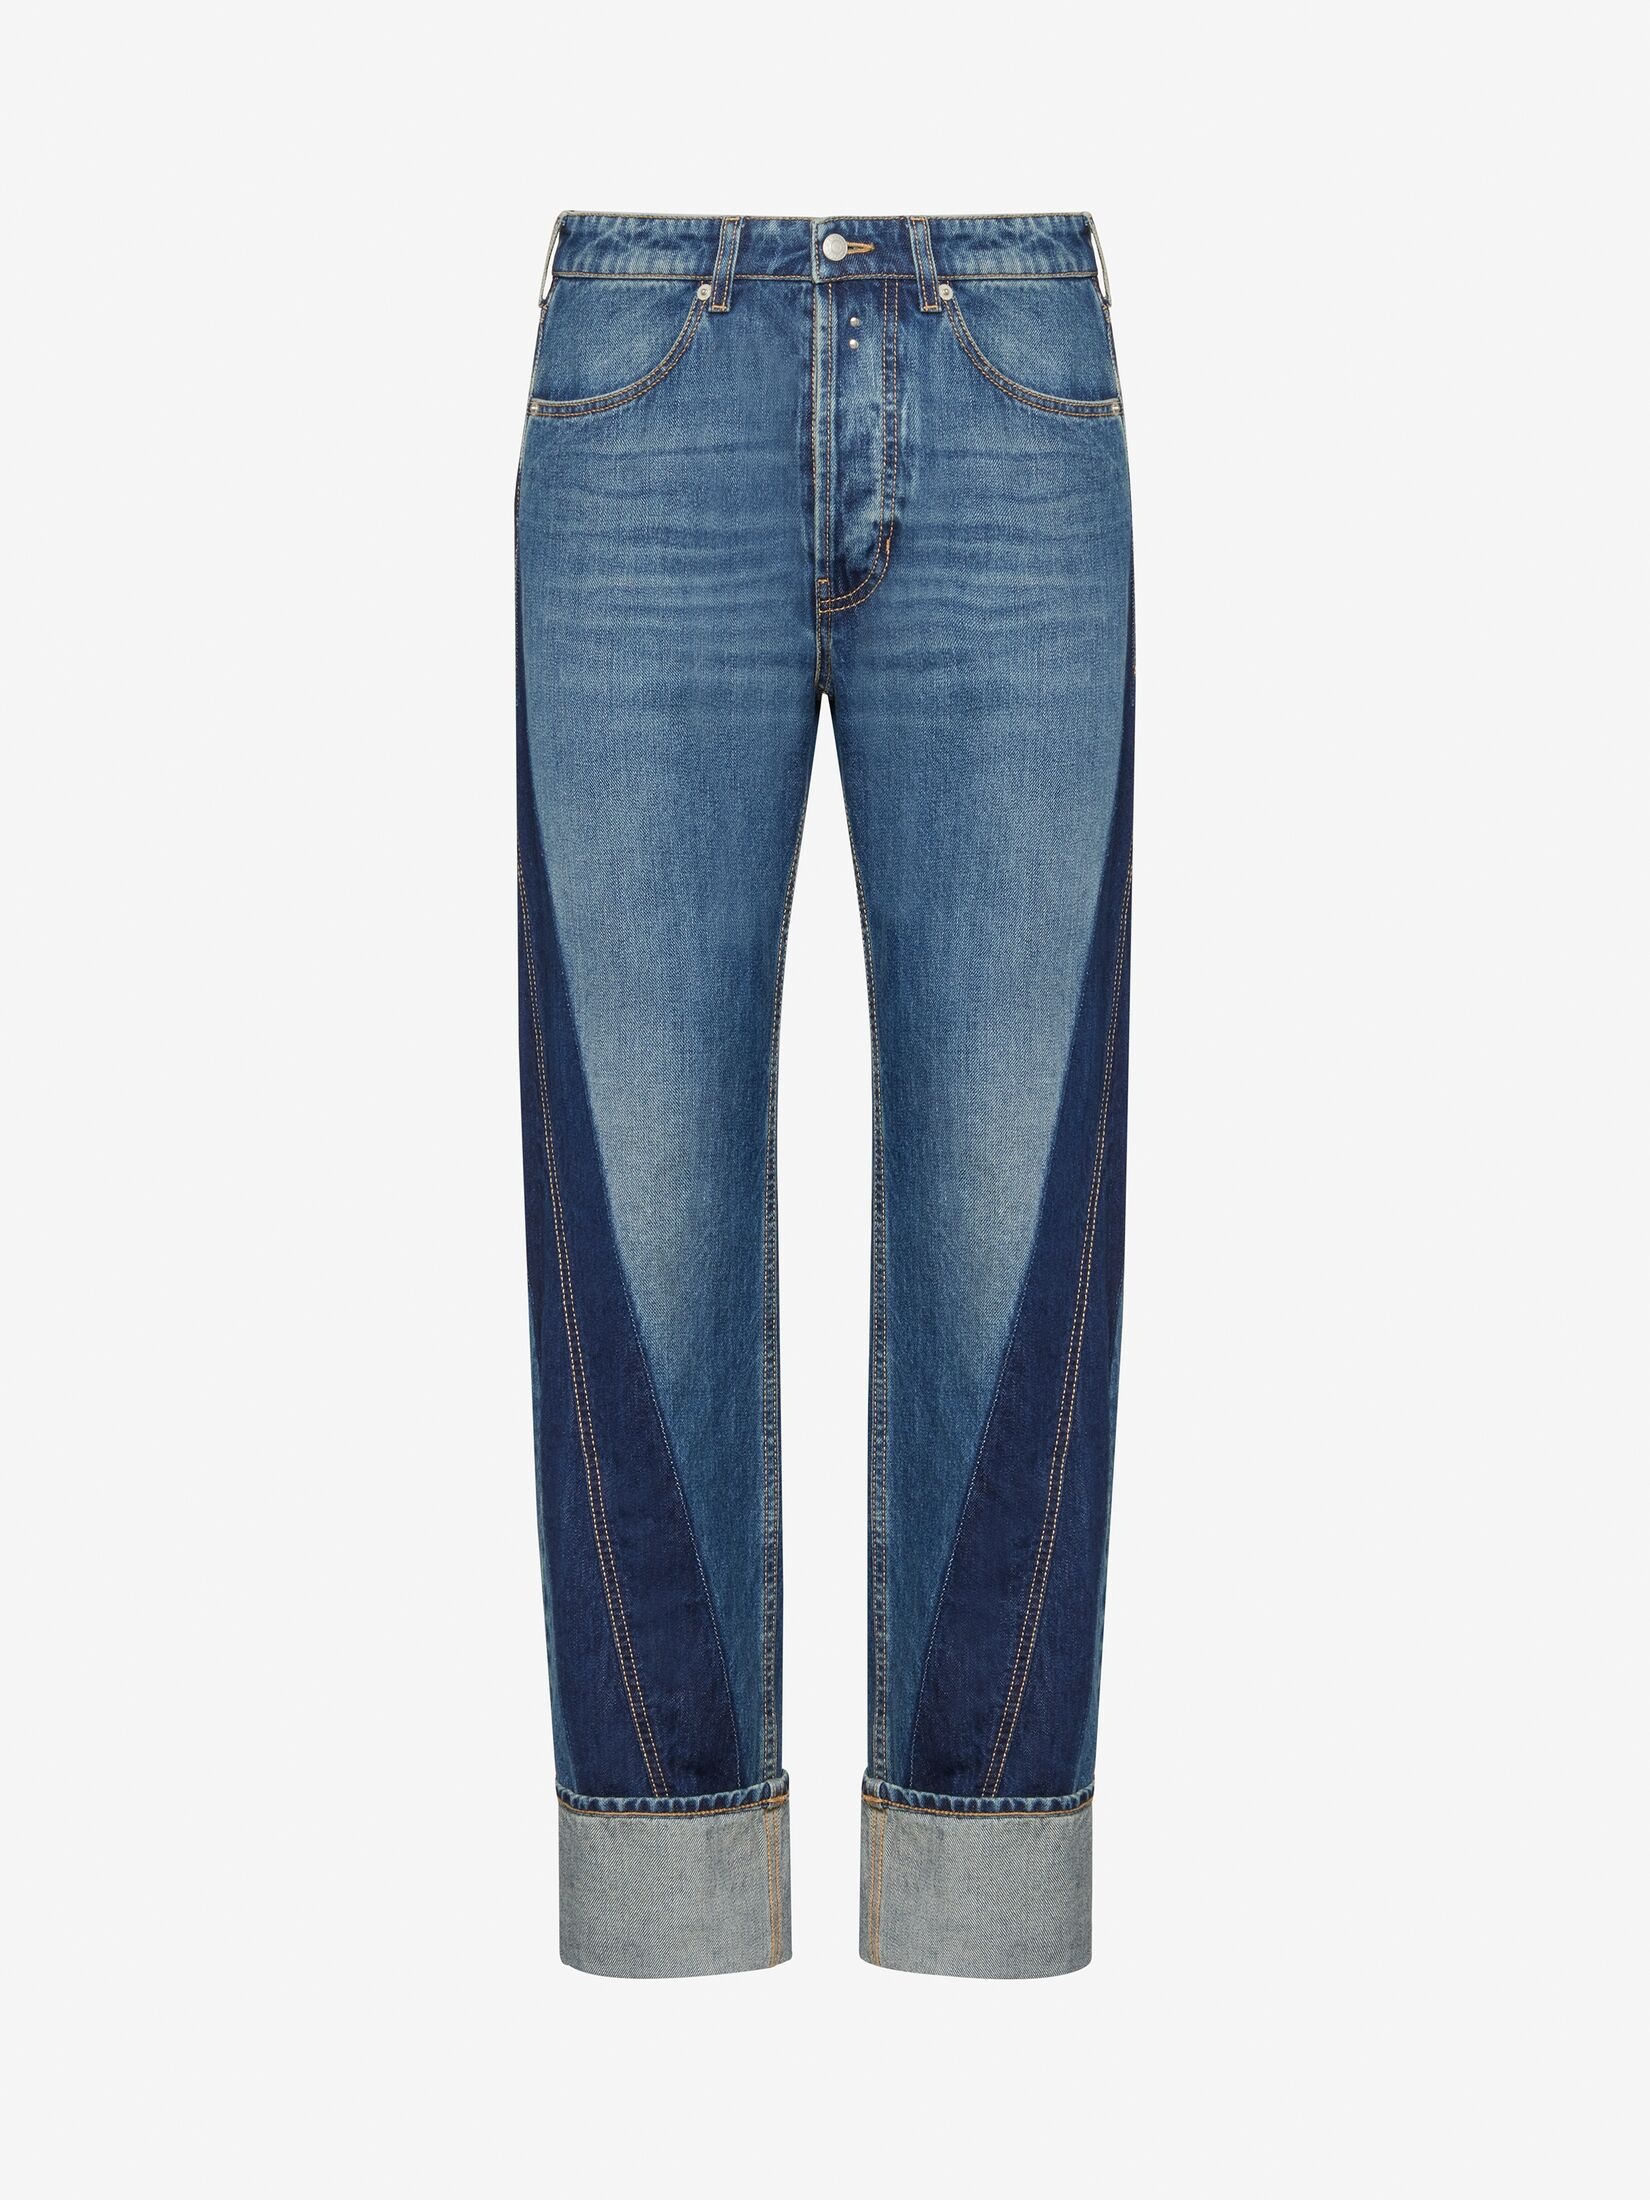 Men's Twisted Stripe Jeans in Washed Blue - 1